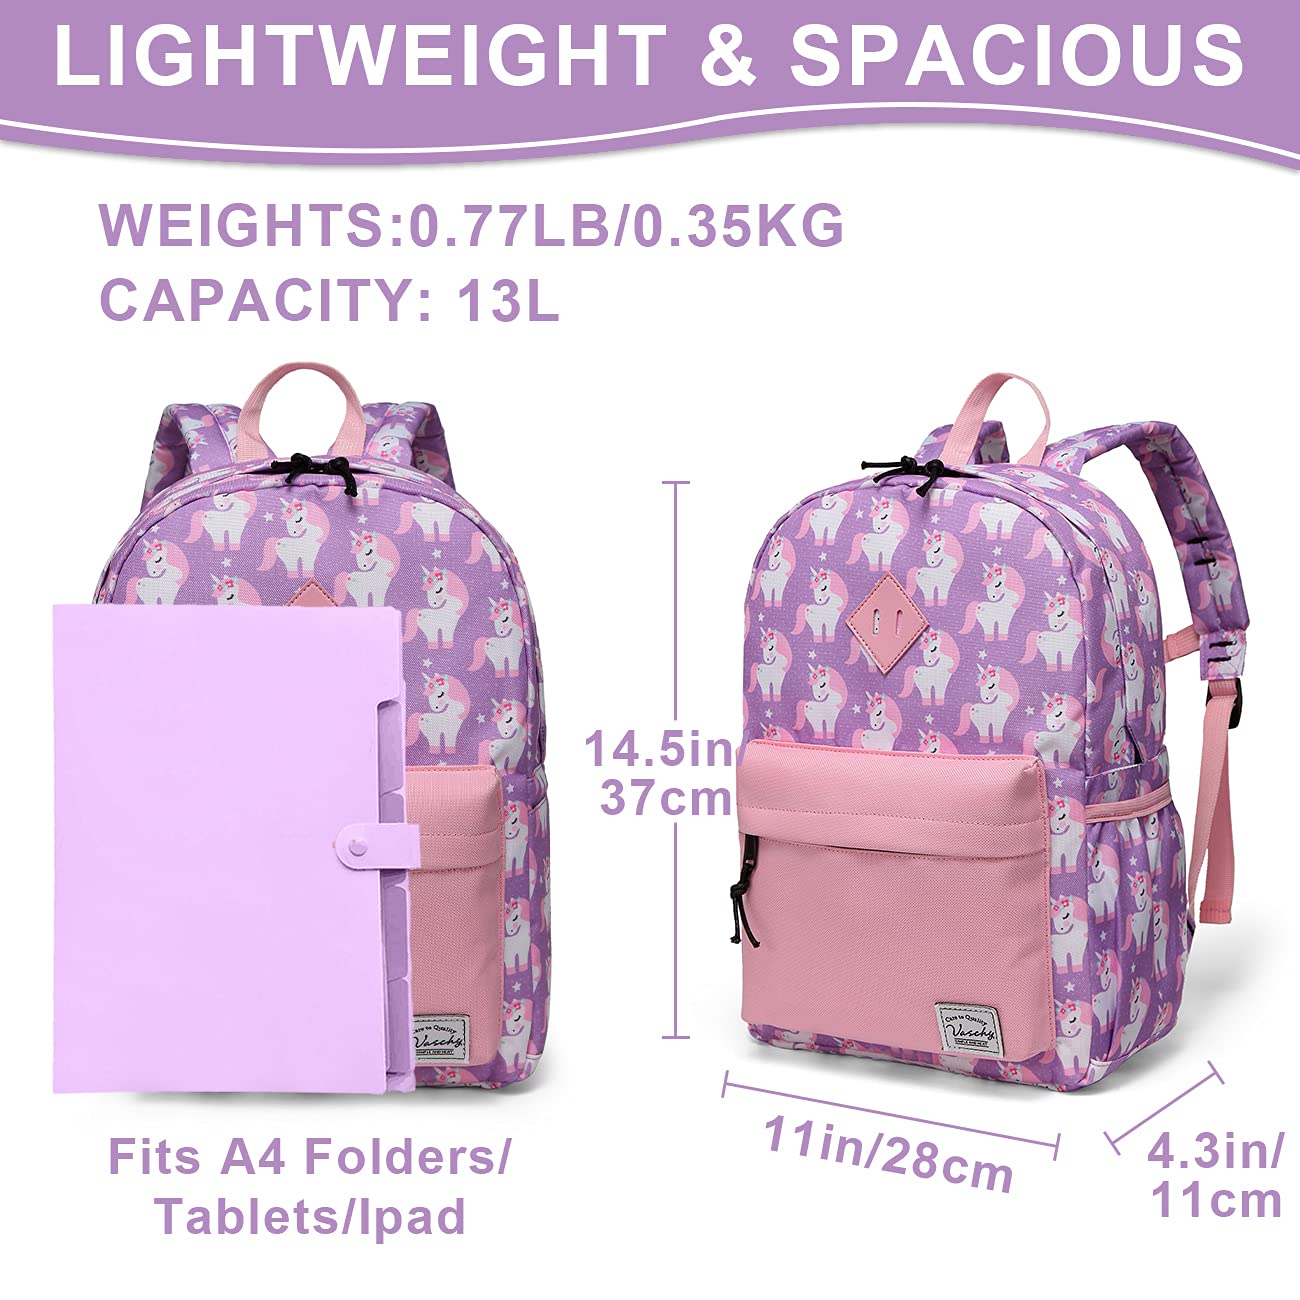 VASCHY Kids Backpack, Cute Lightweight Preschool Backpack for Toddlers Boys Girls